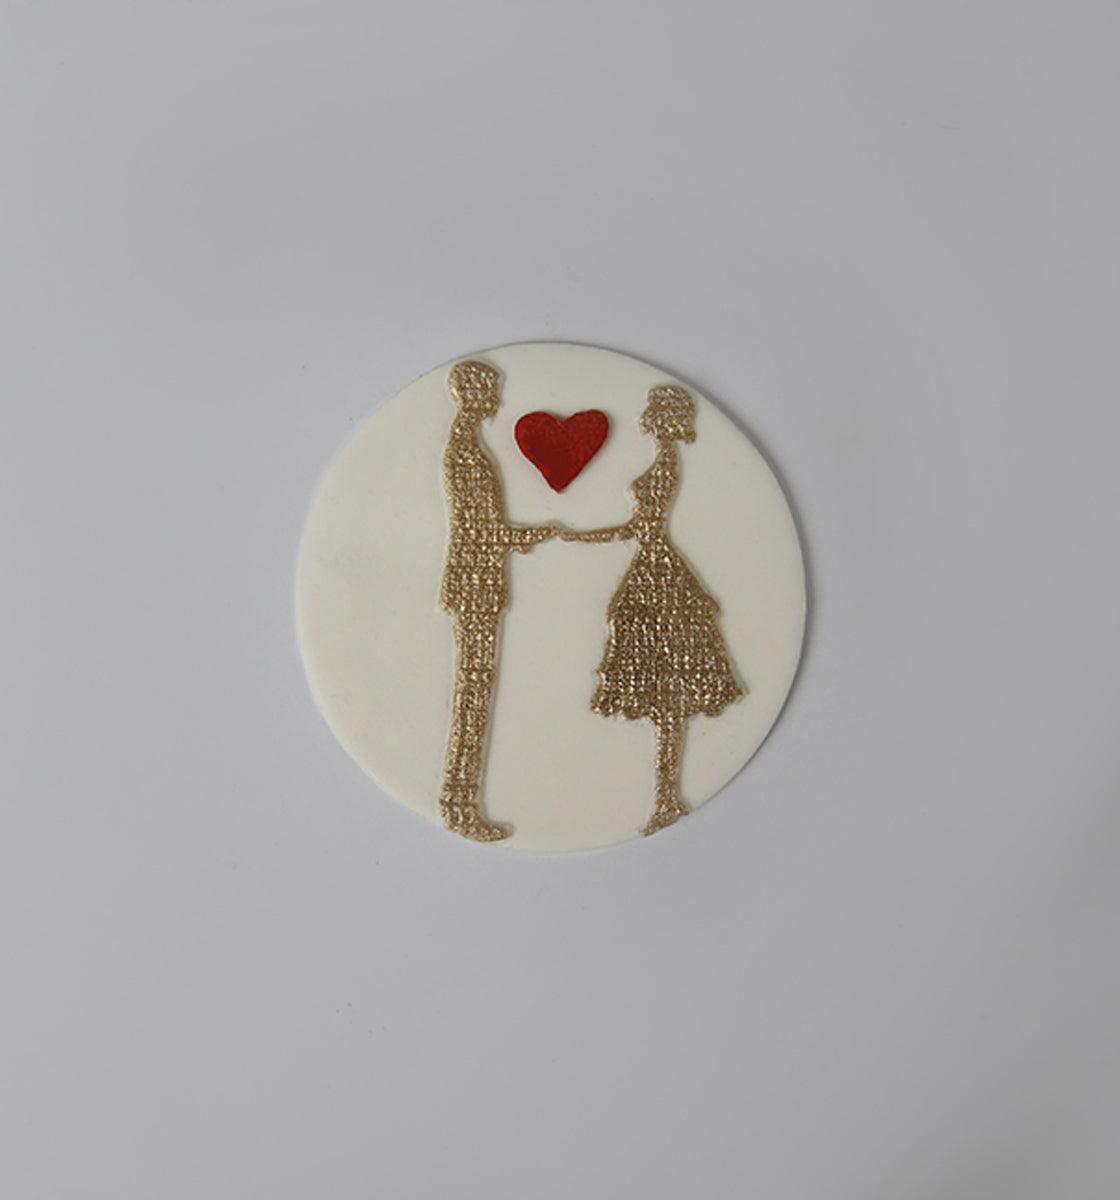 In Love - Embosser Stamp - Inspired Baking Pakistan